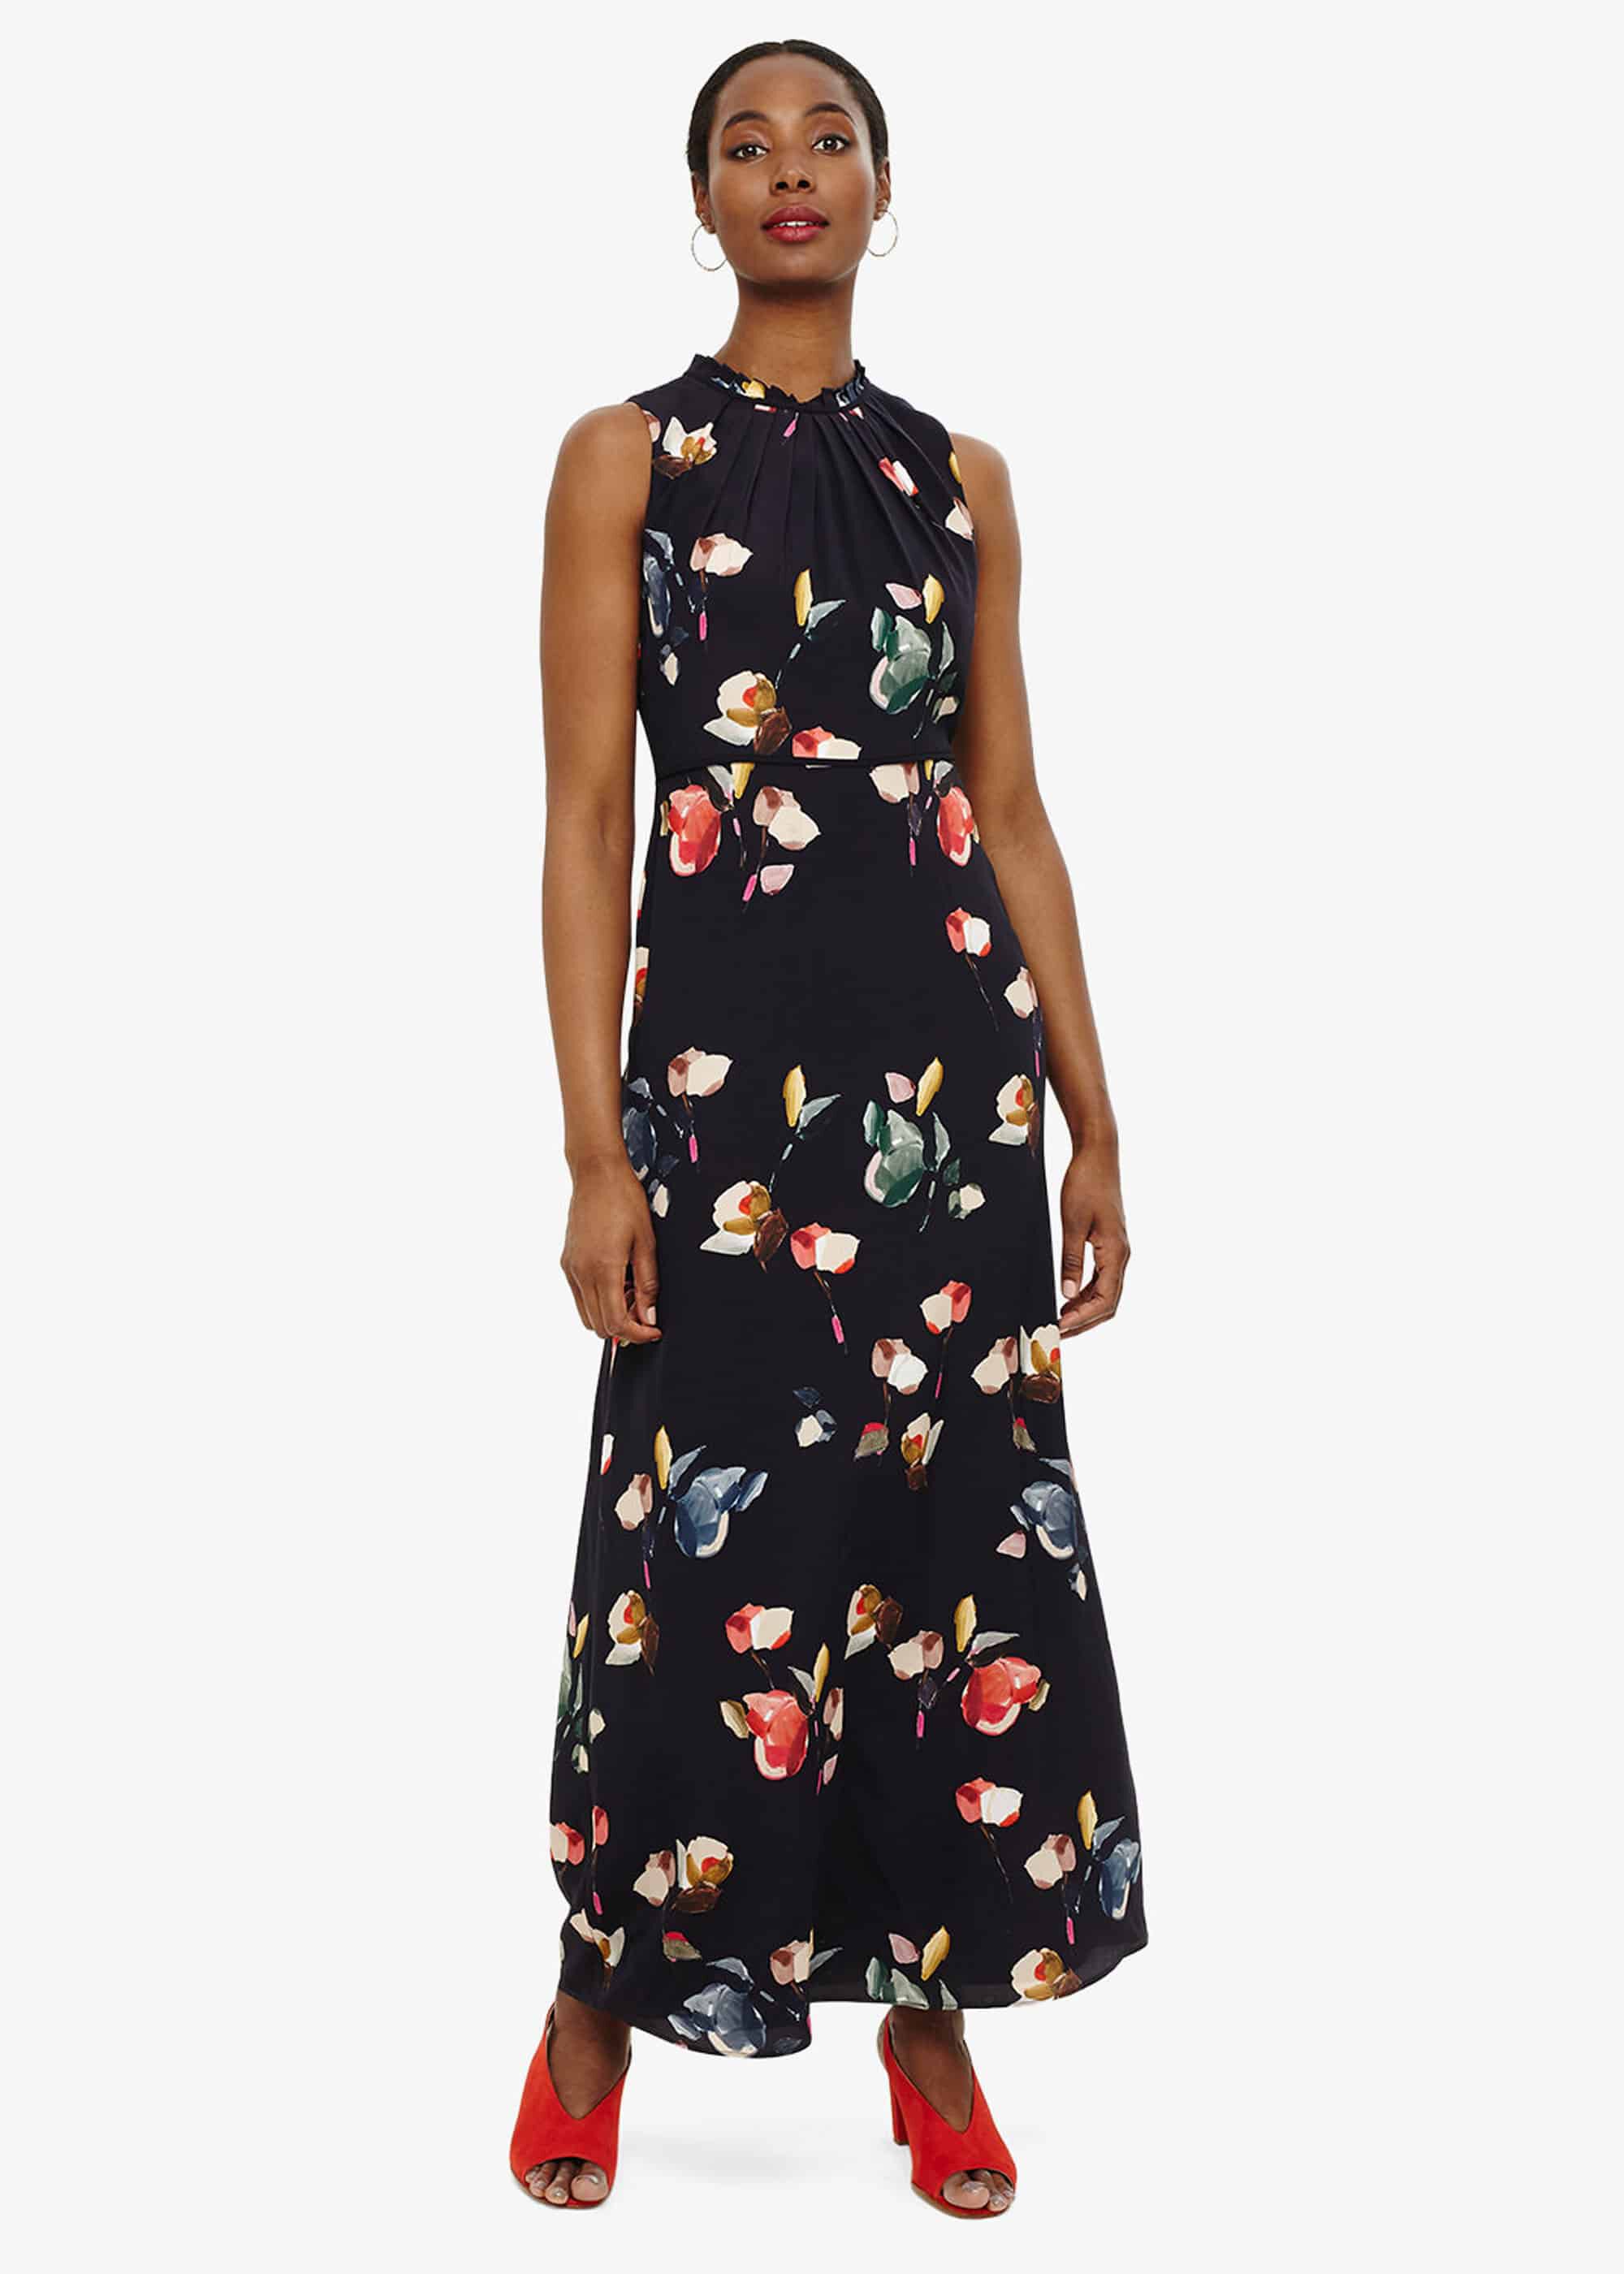 Berdina Floral Maxi Dress | Phase Eight